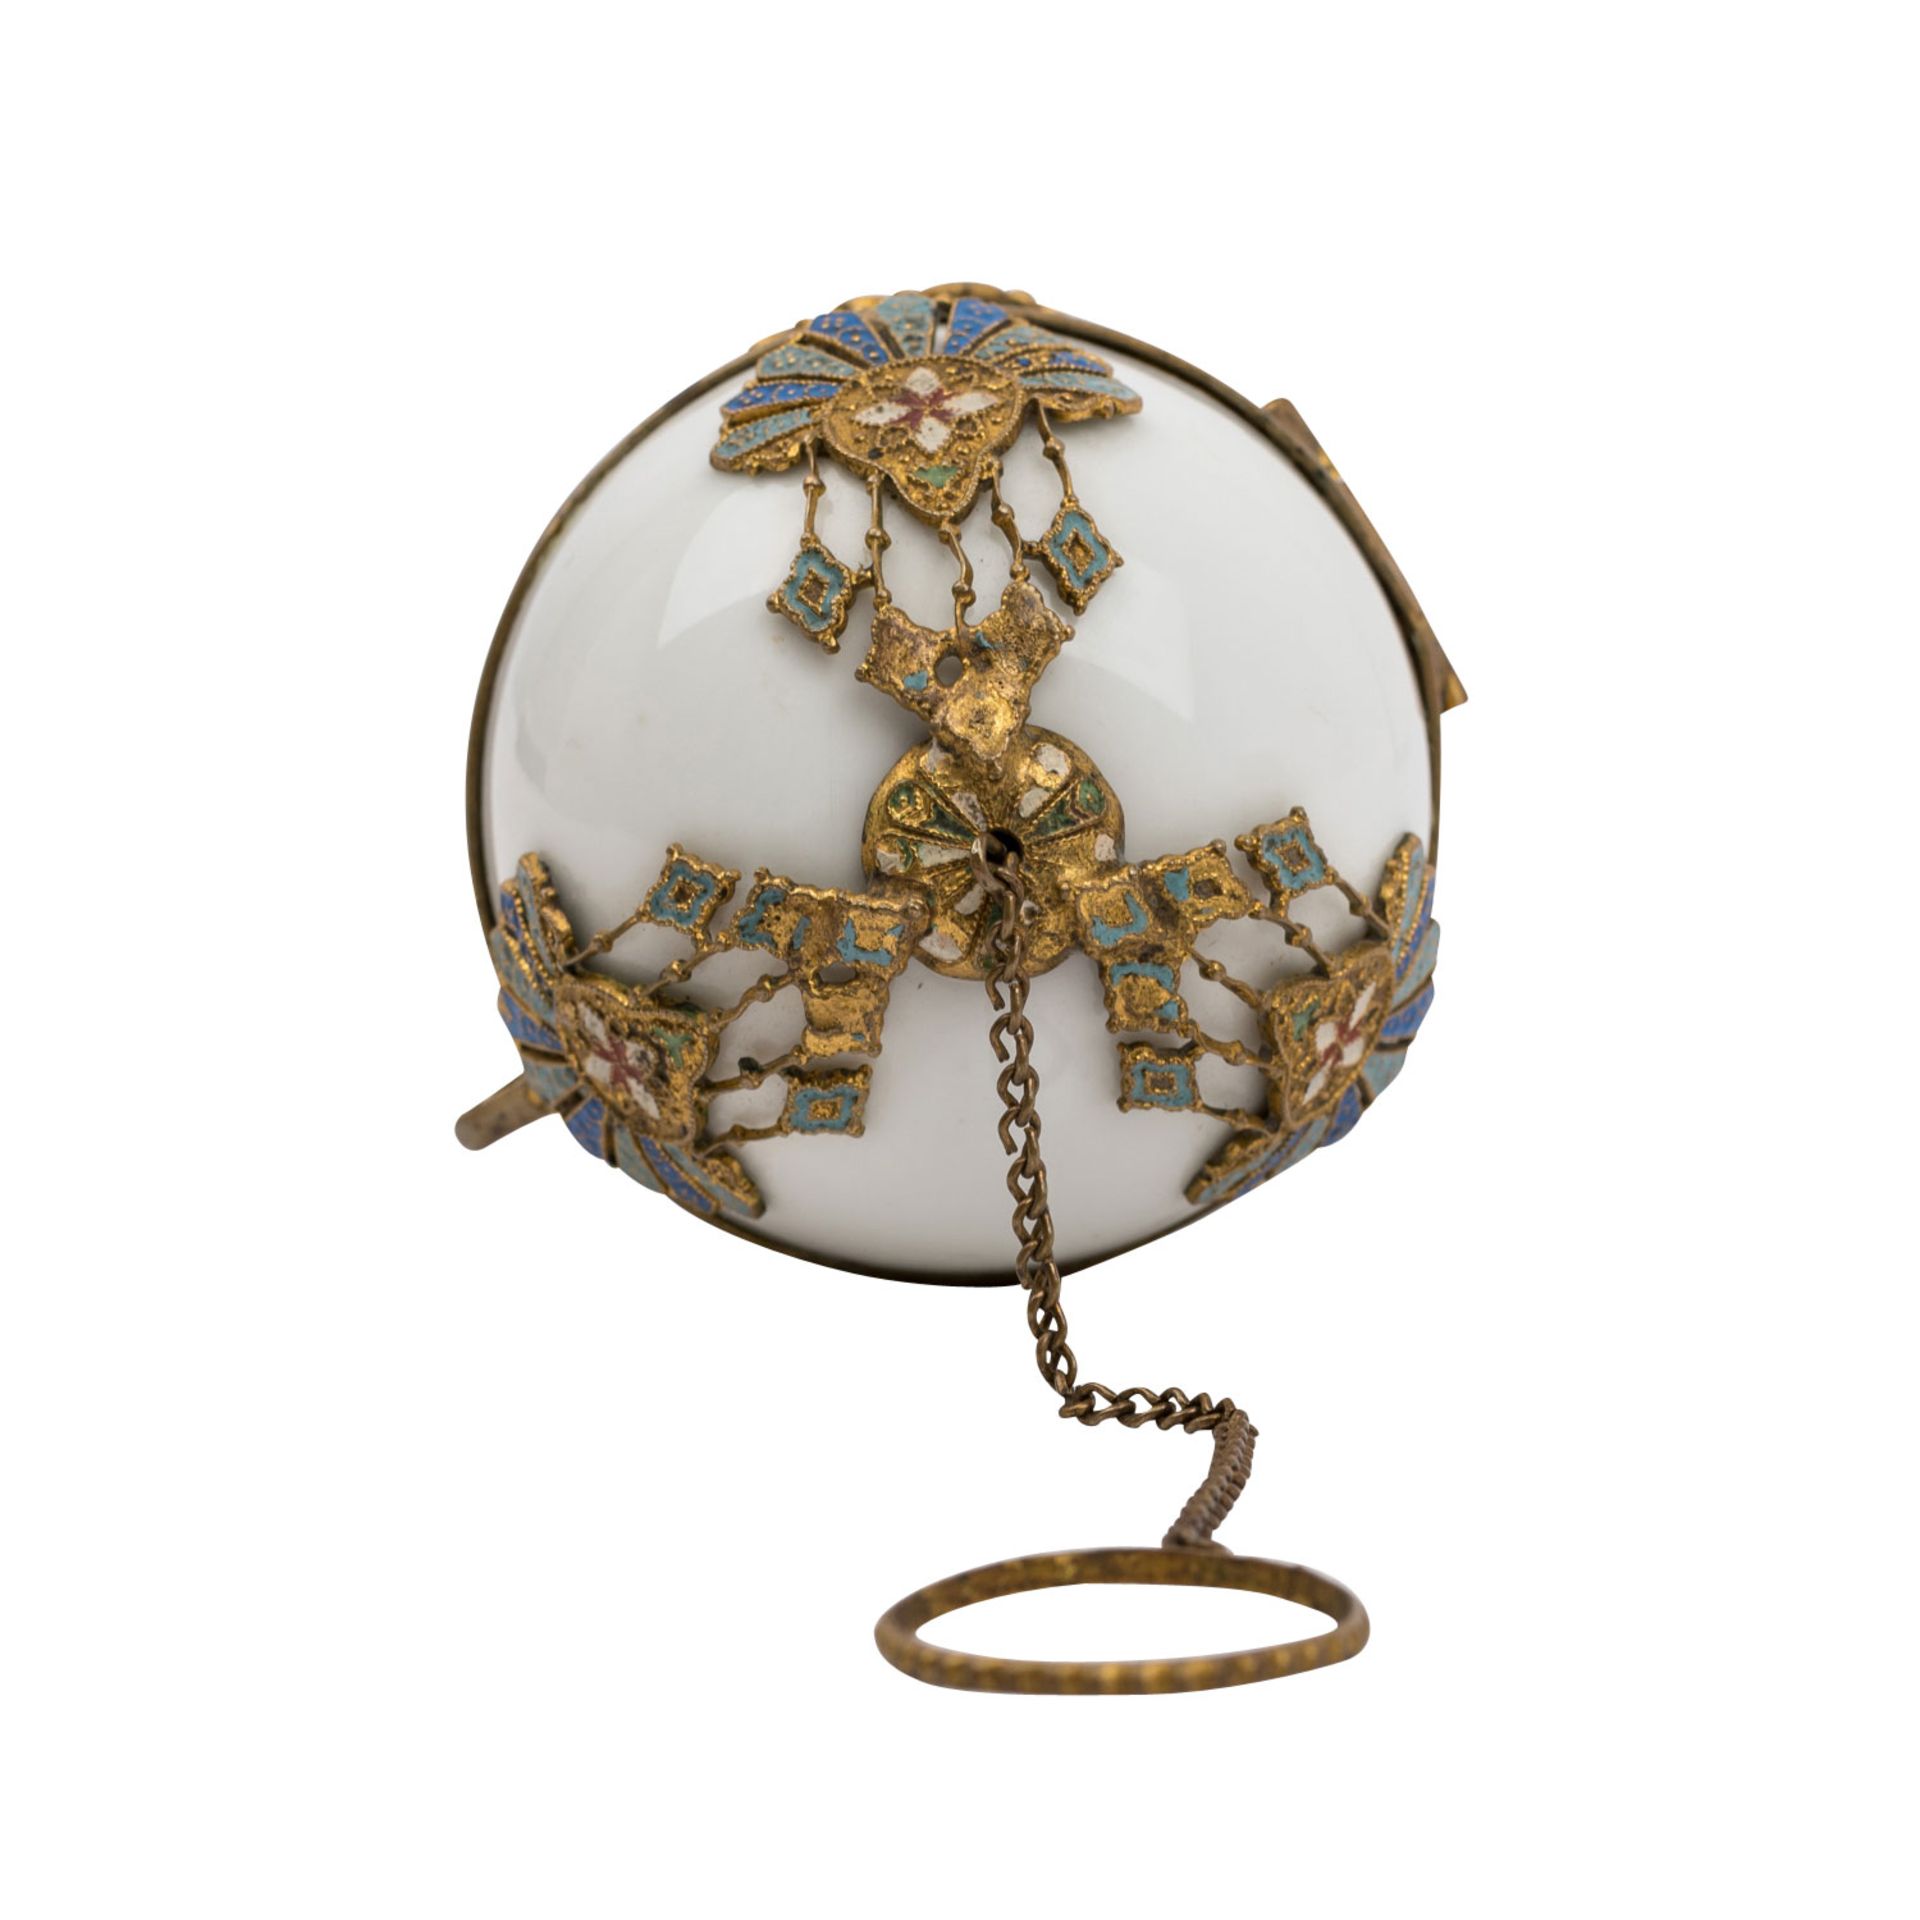 RUSSLAND Porzellan-Zierei im Fabergé-Stil, 20. Jh. - Bild 3 aus 4